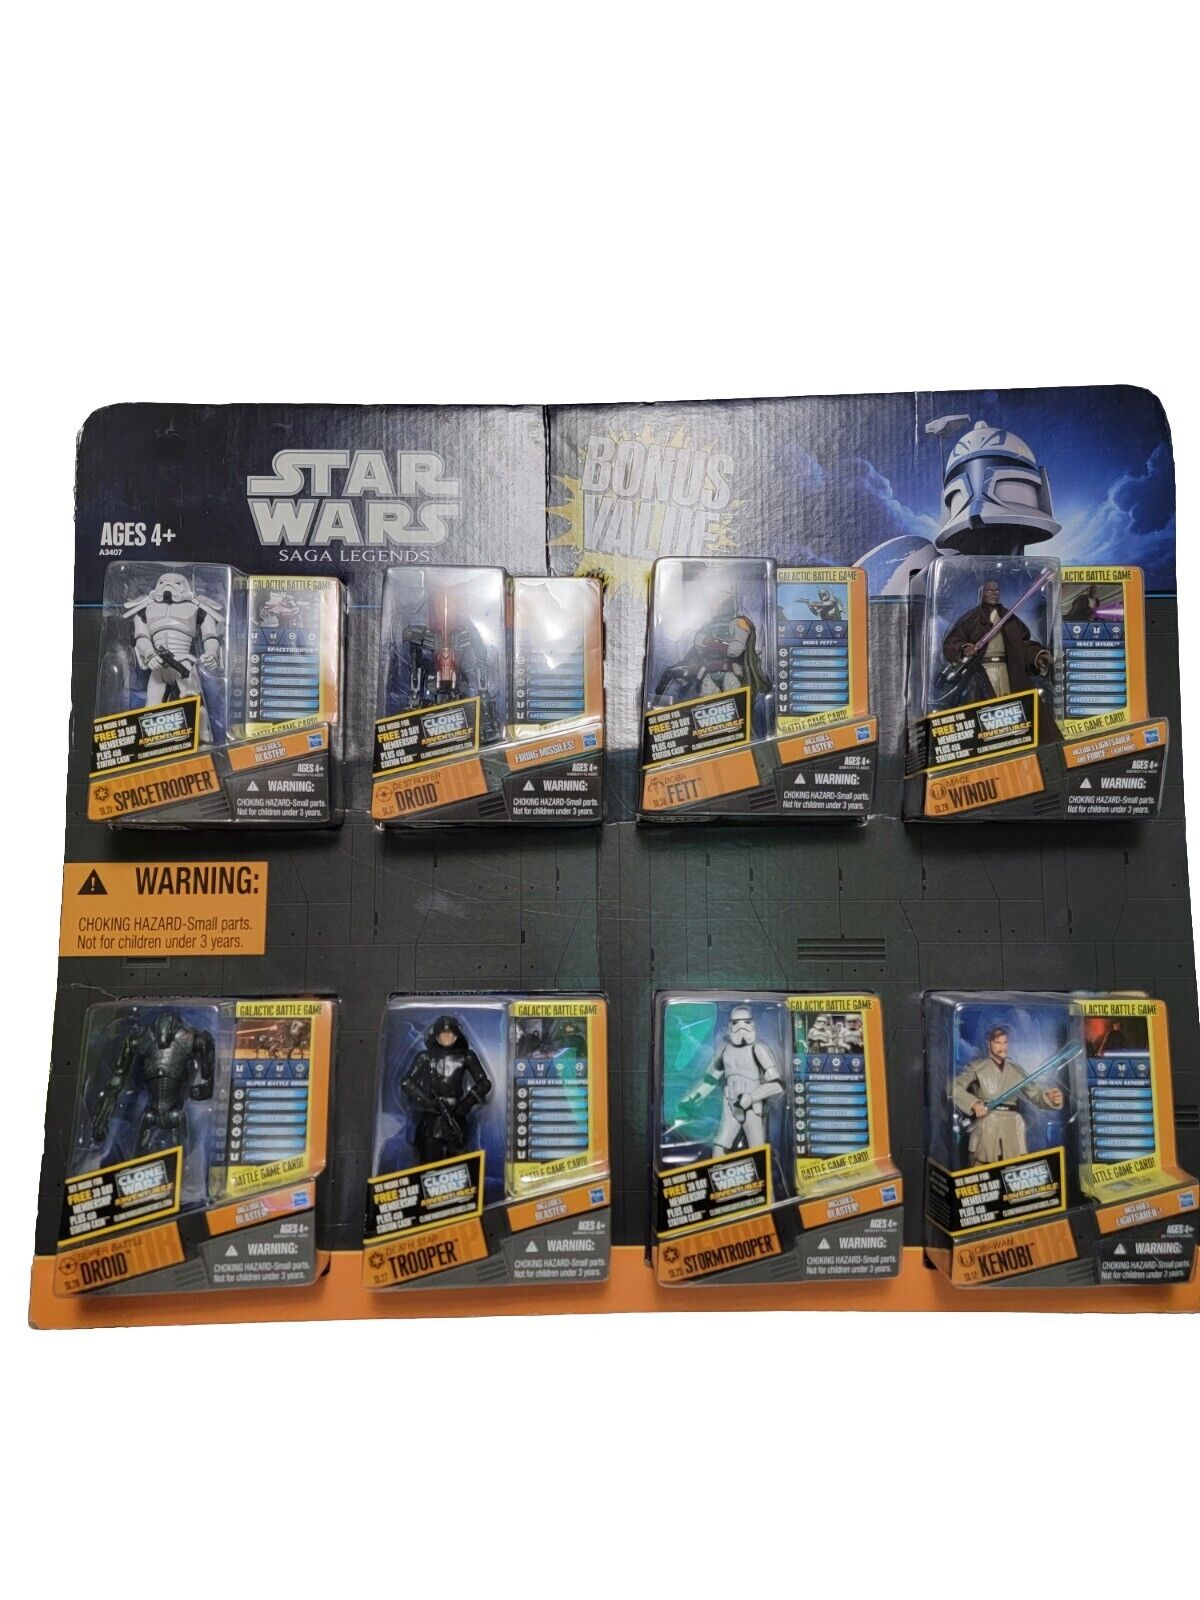 Star Wars Saga Legends Bonus Value 8 Action Figure Set Hasbro Display 23"x19"